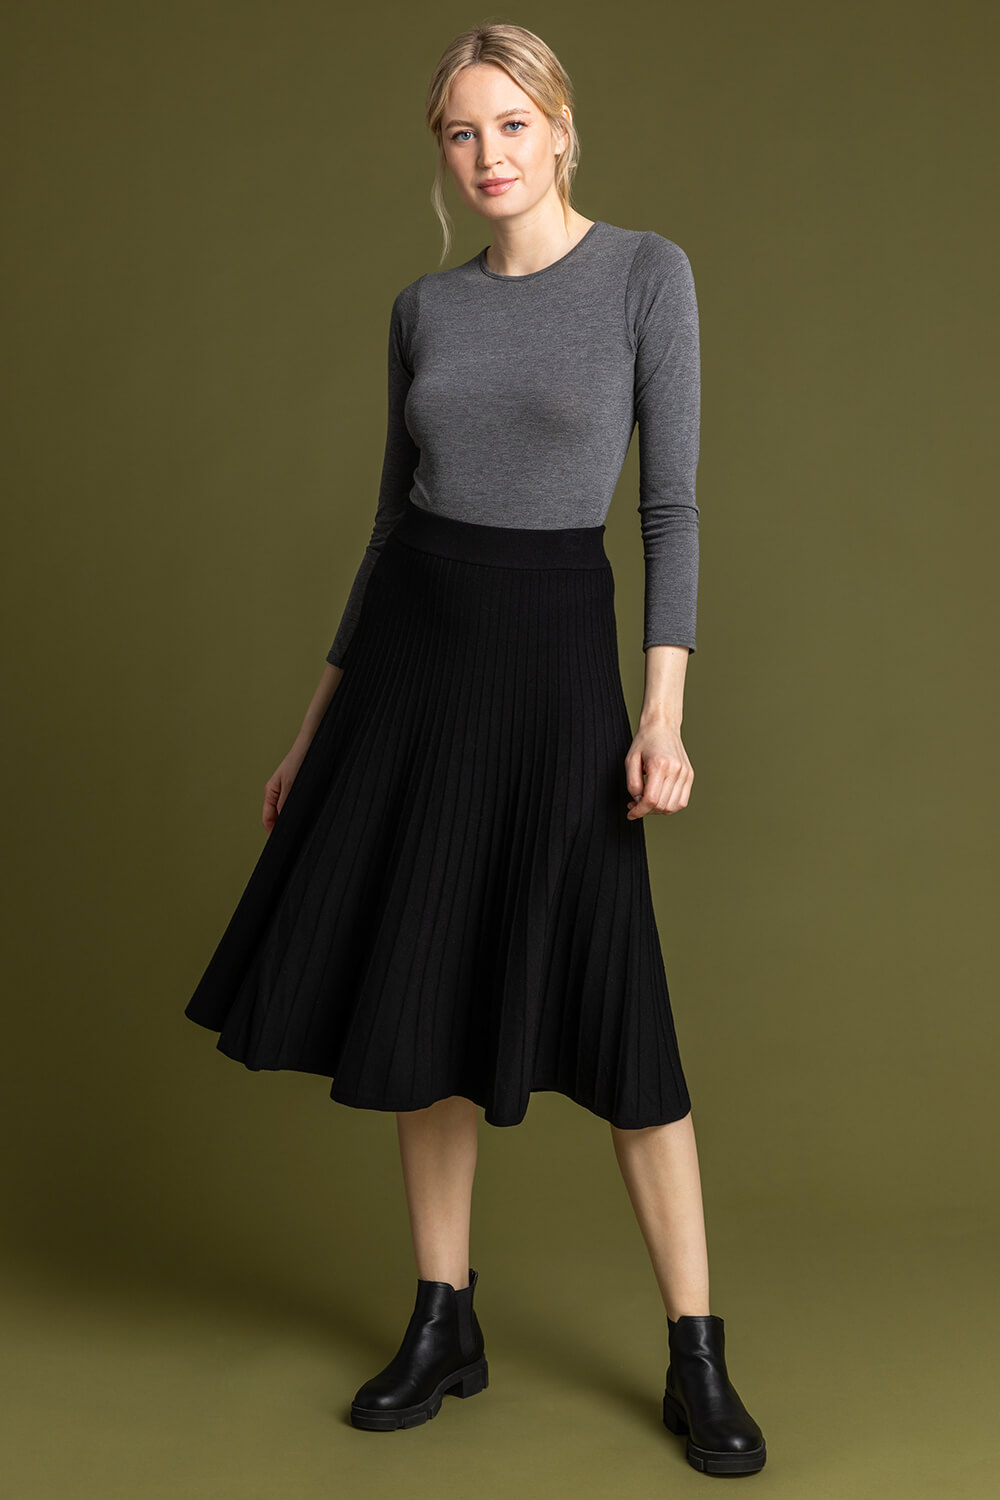 Ribbed Knit Pleated Midi Skirt in Black - Roman Originals UK